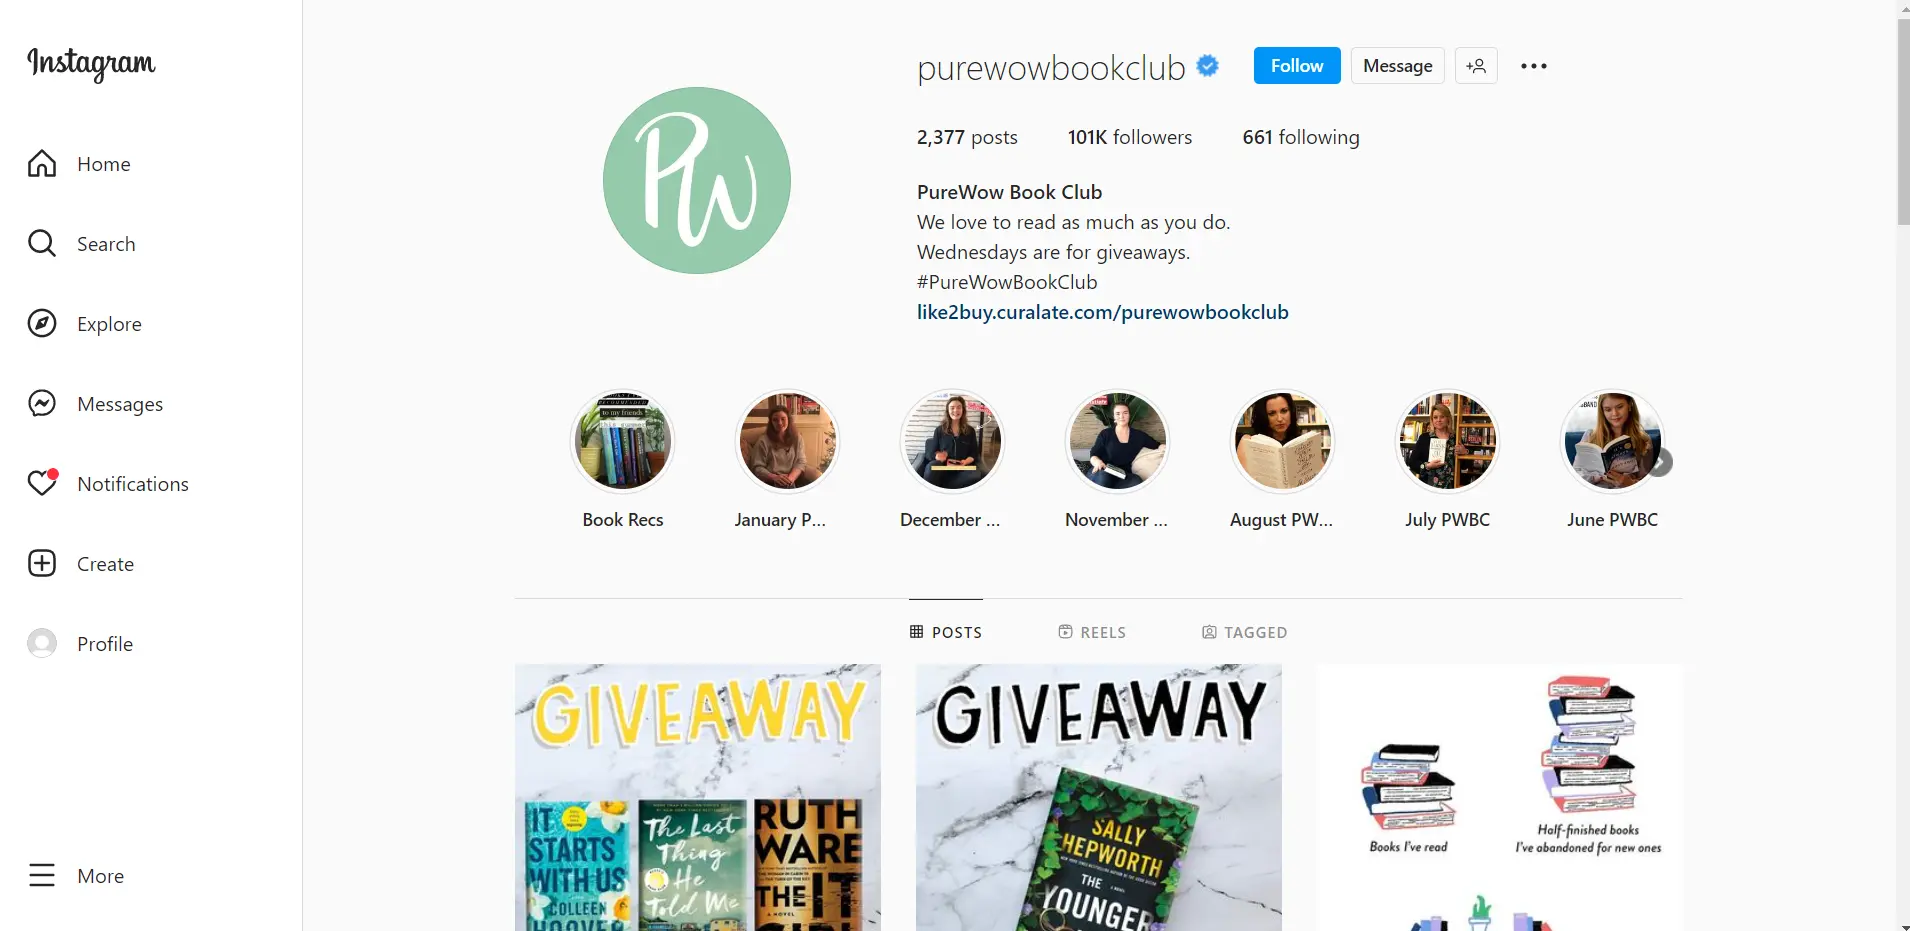 PureWow Book Club Instagram Page